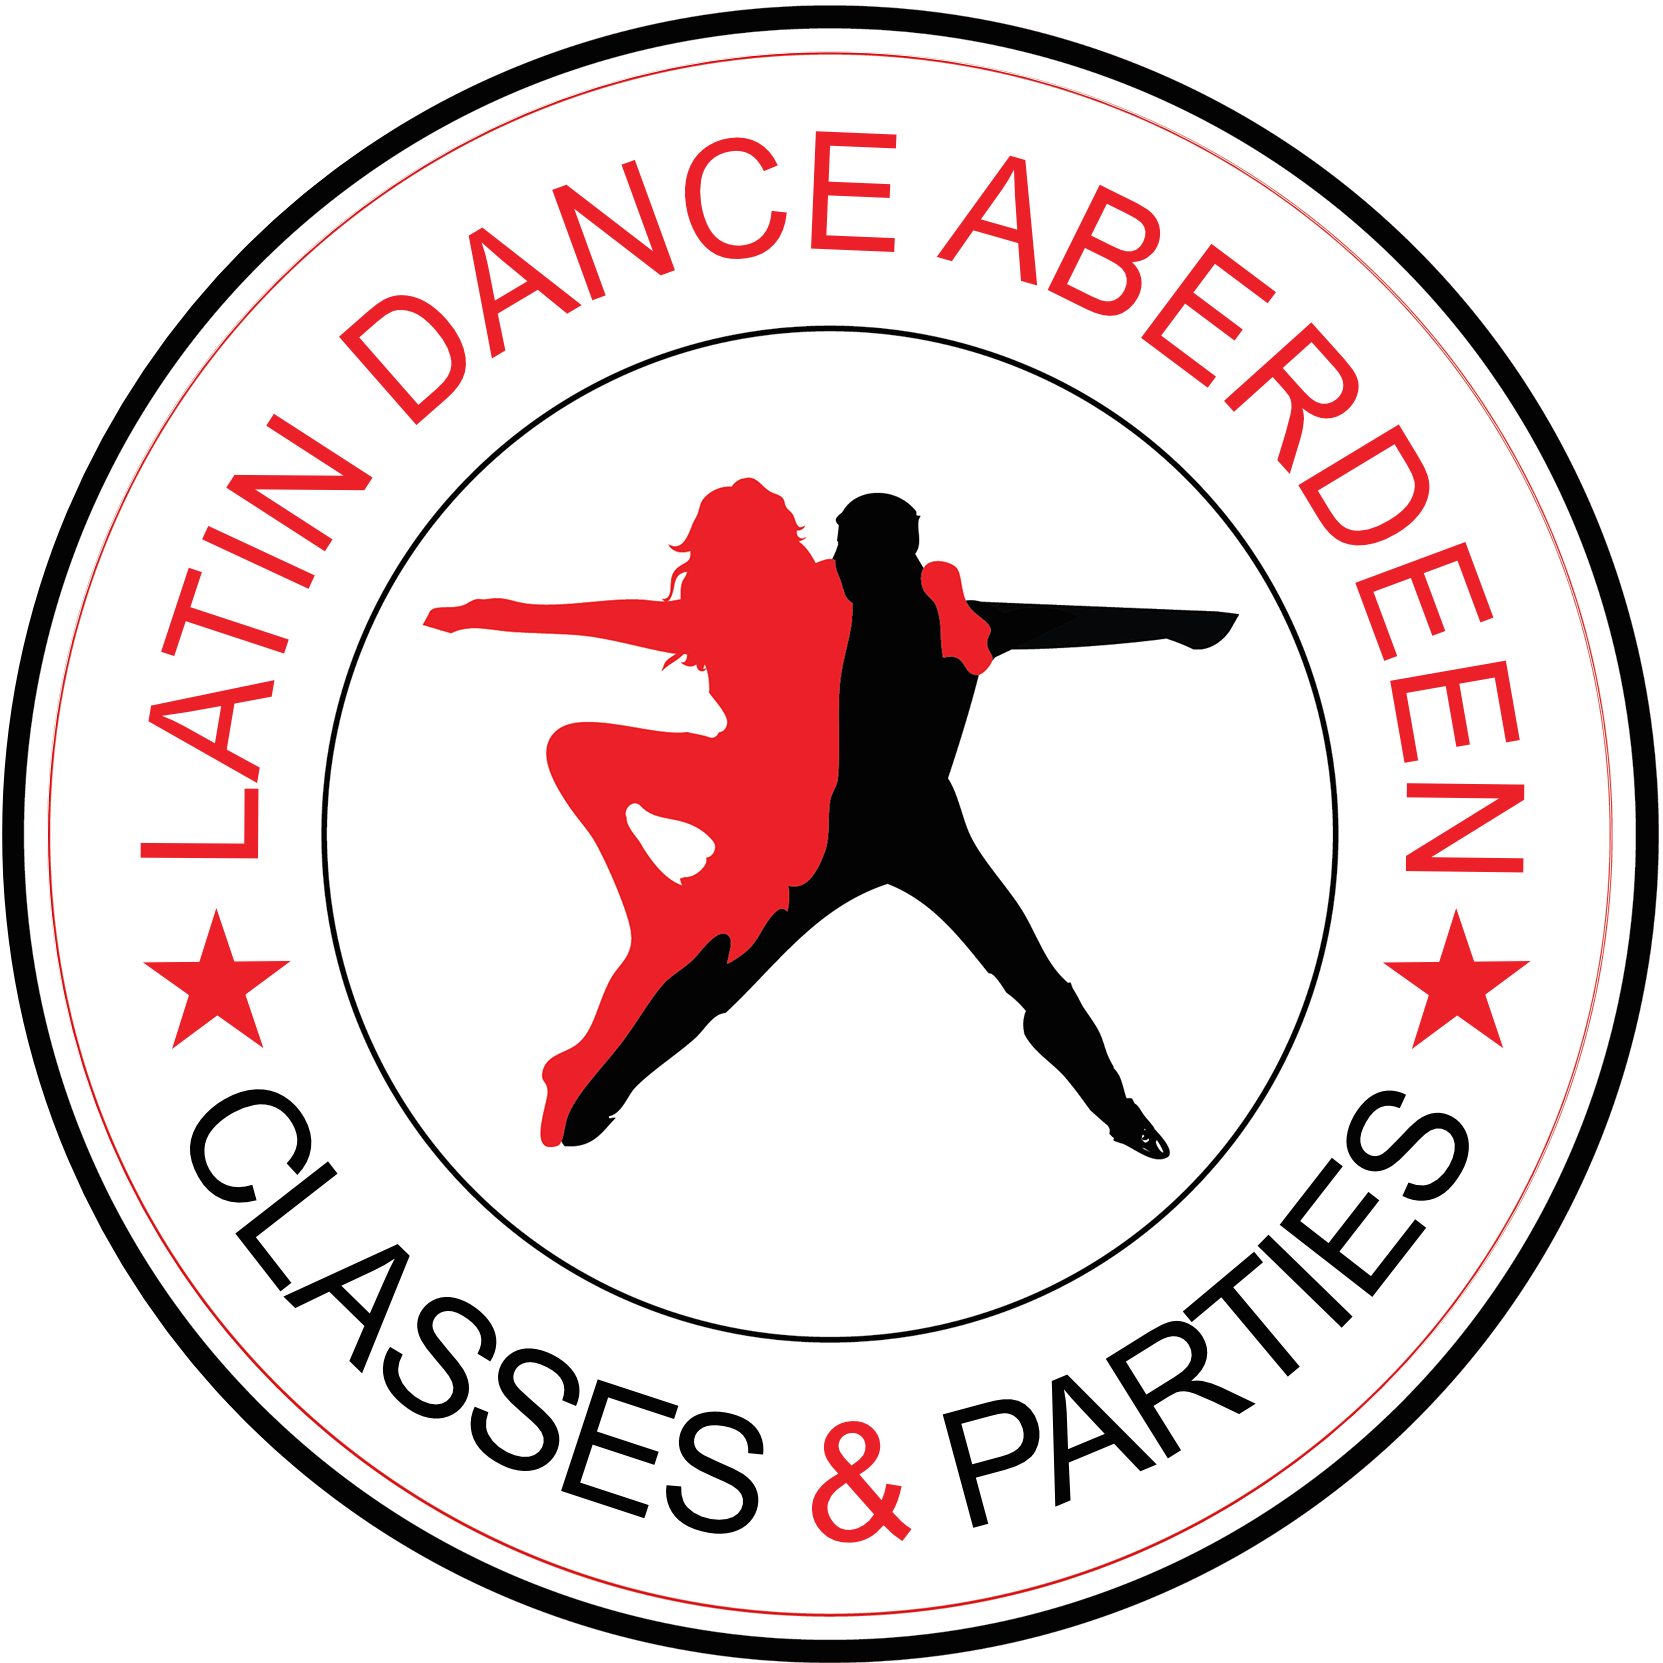 Latin Dance Aberdeen Logo